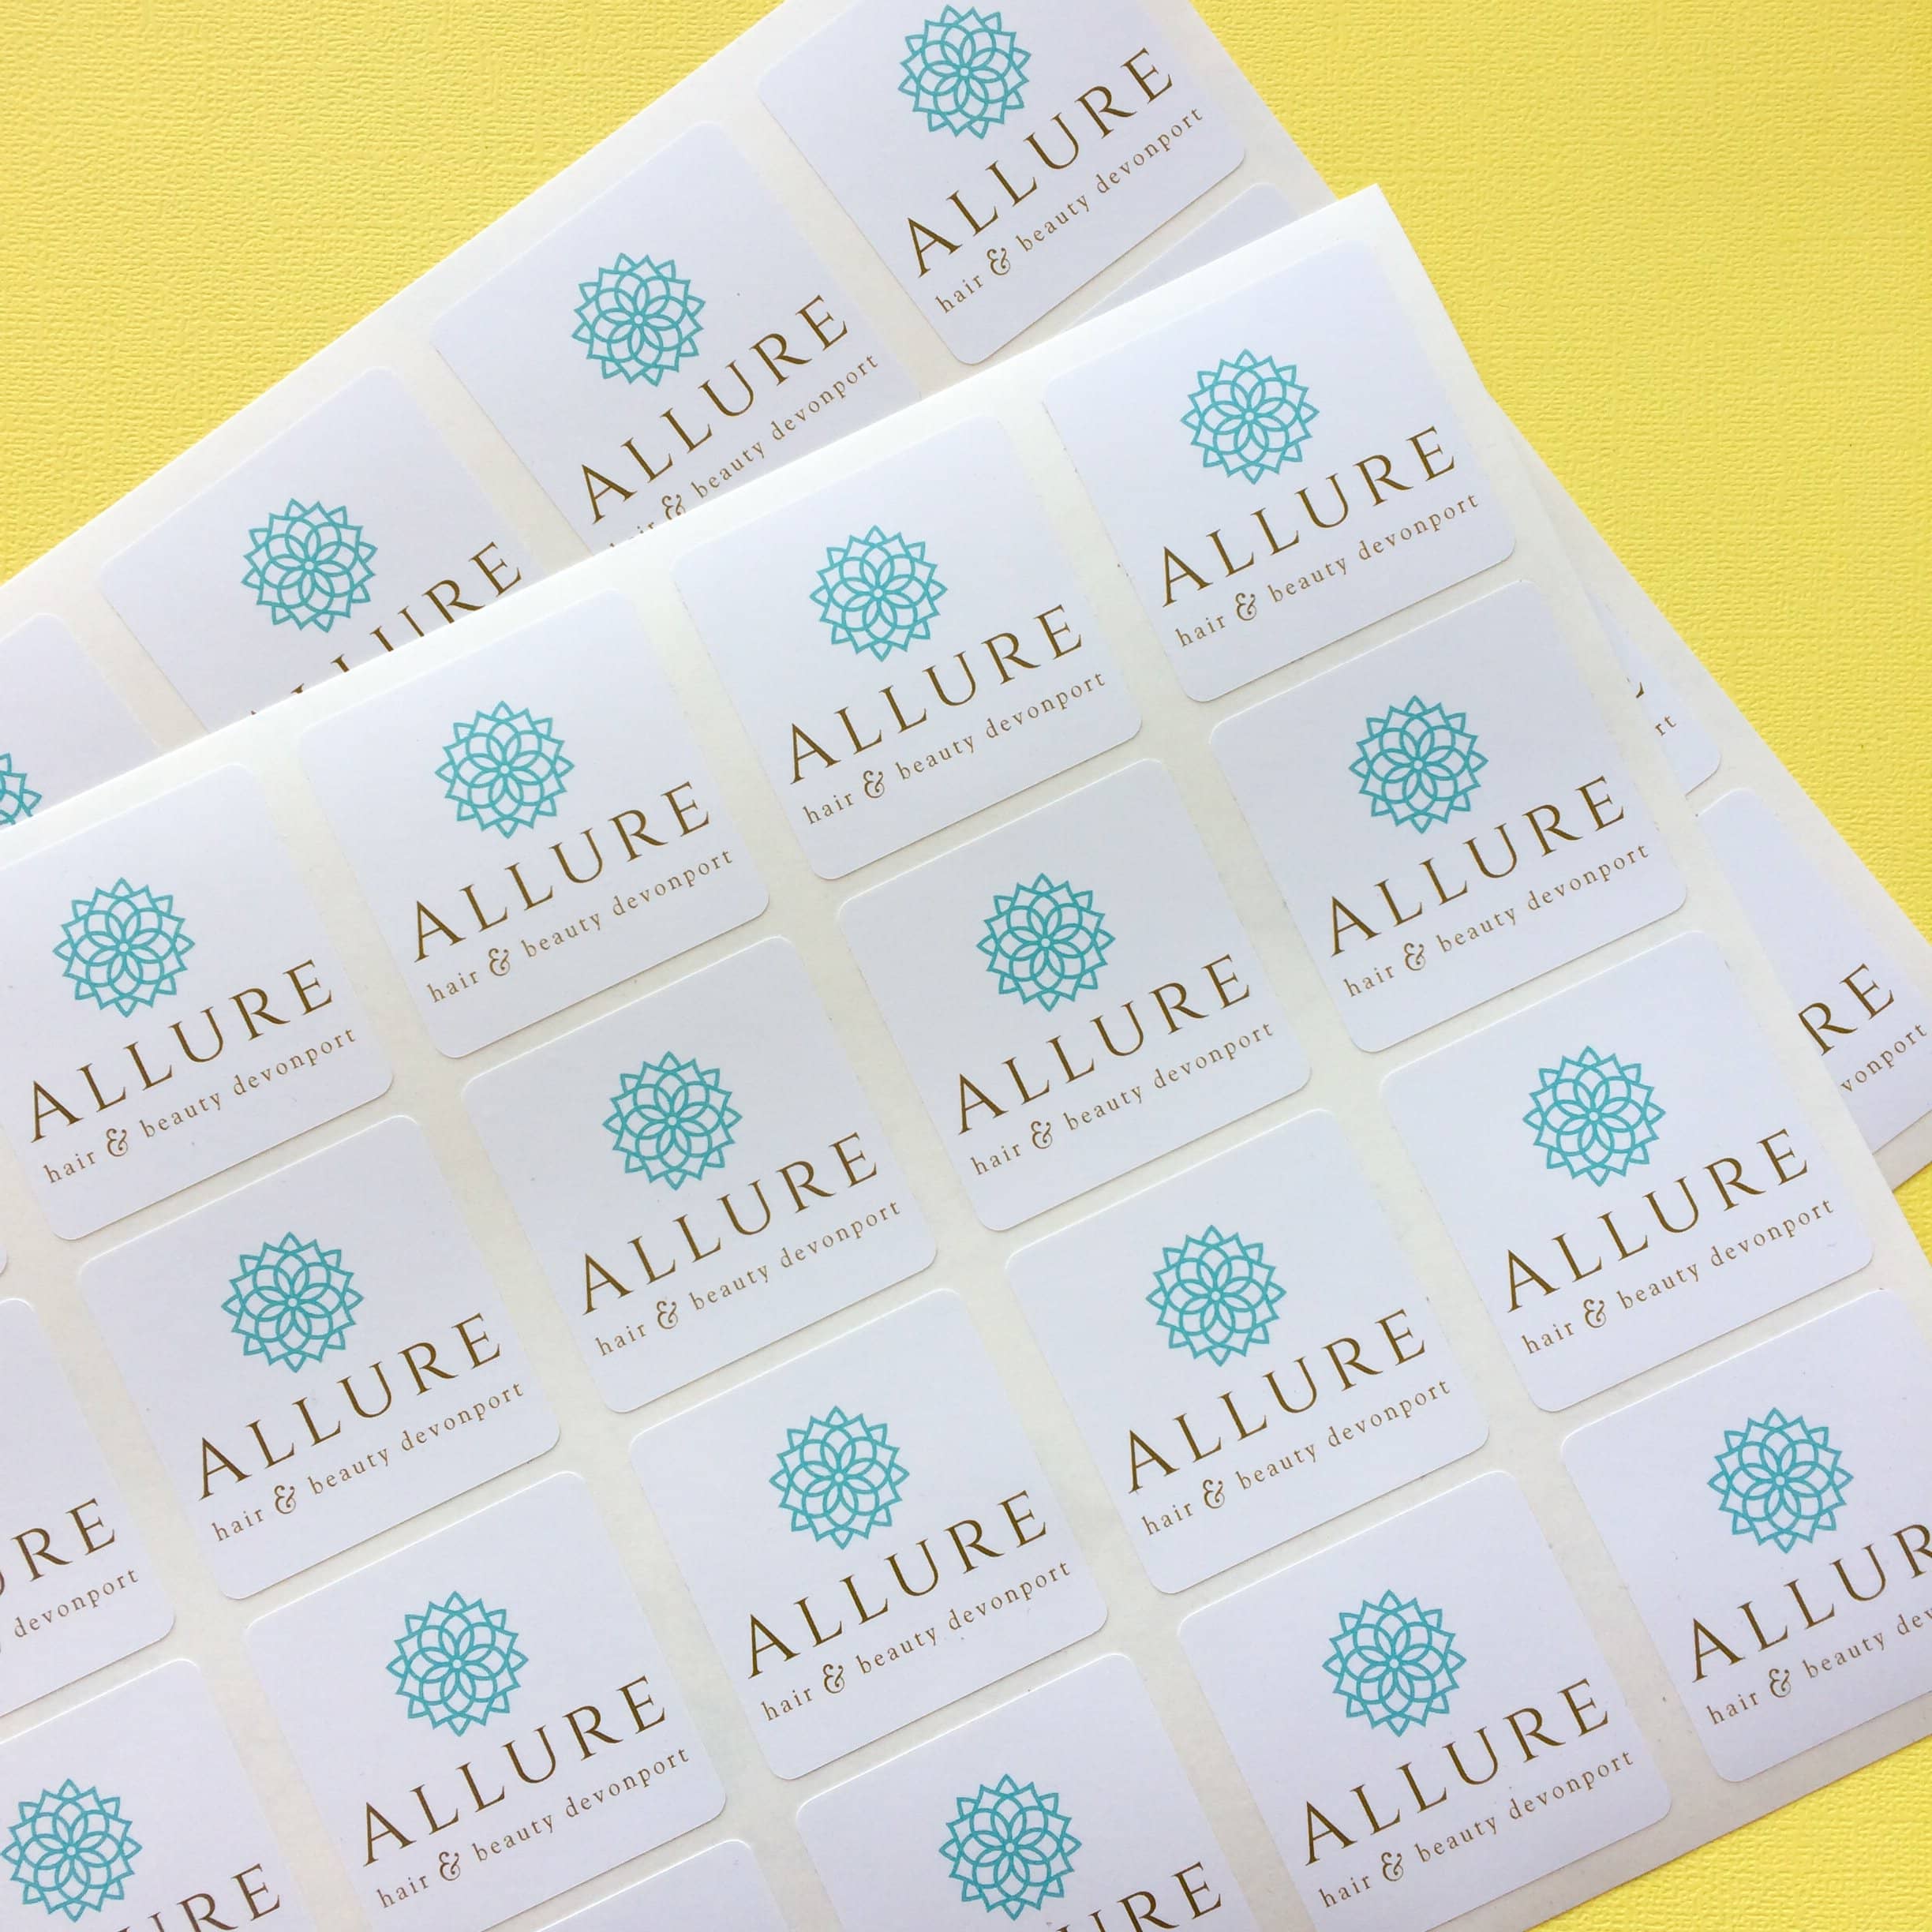 Allure Hair & Beauty Development brand logo square sheet label stickers.